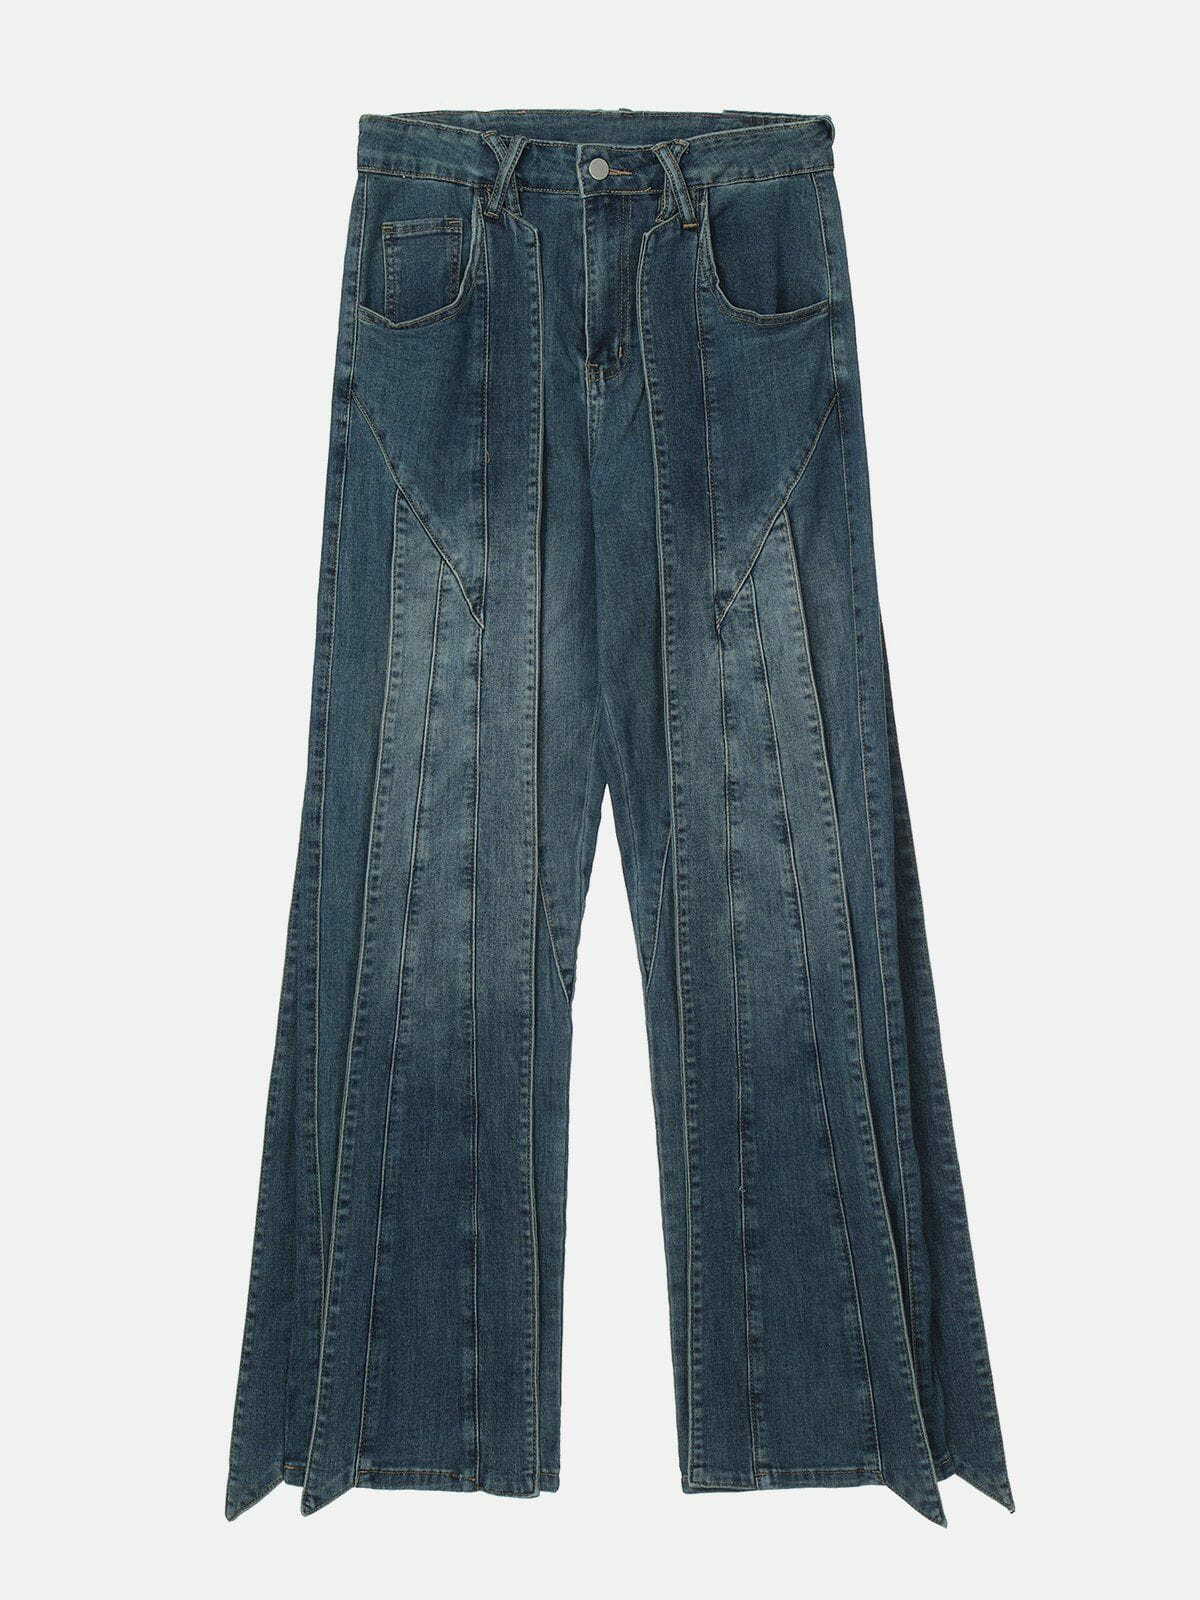 deconstructed split jeans edgy streetwear staple 3809